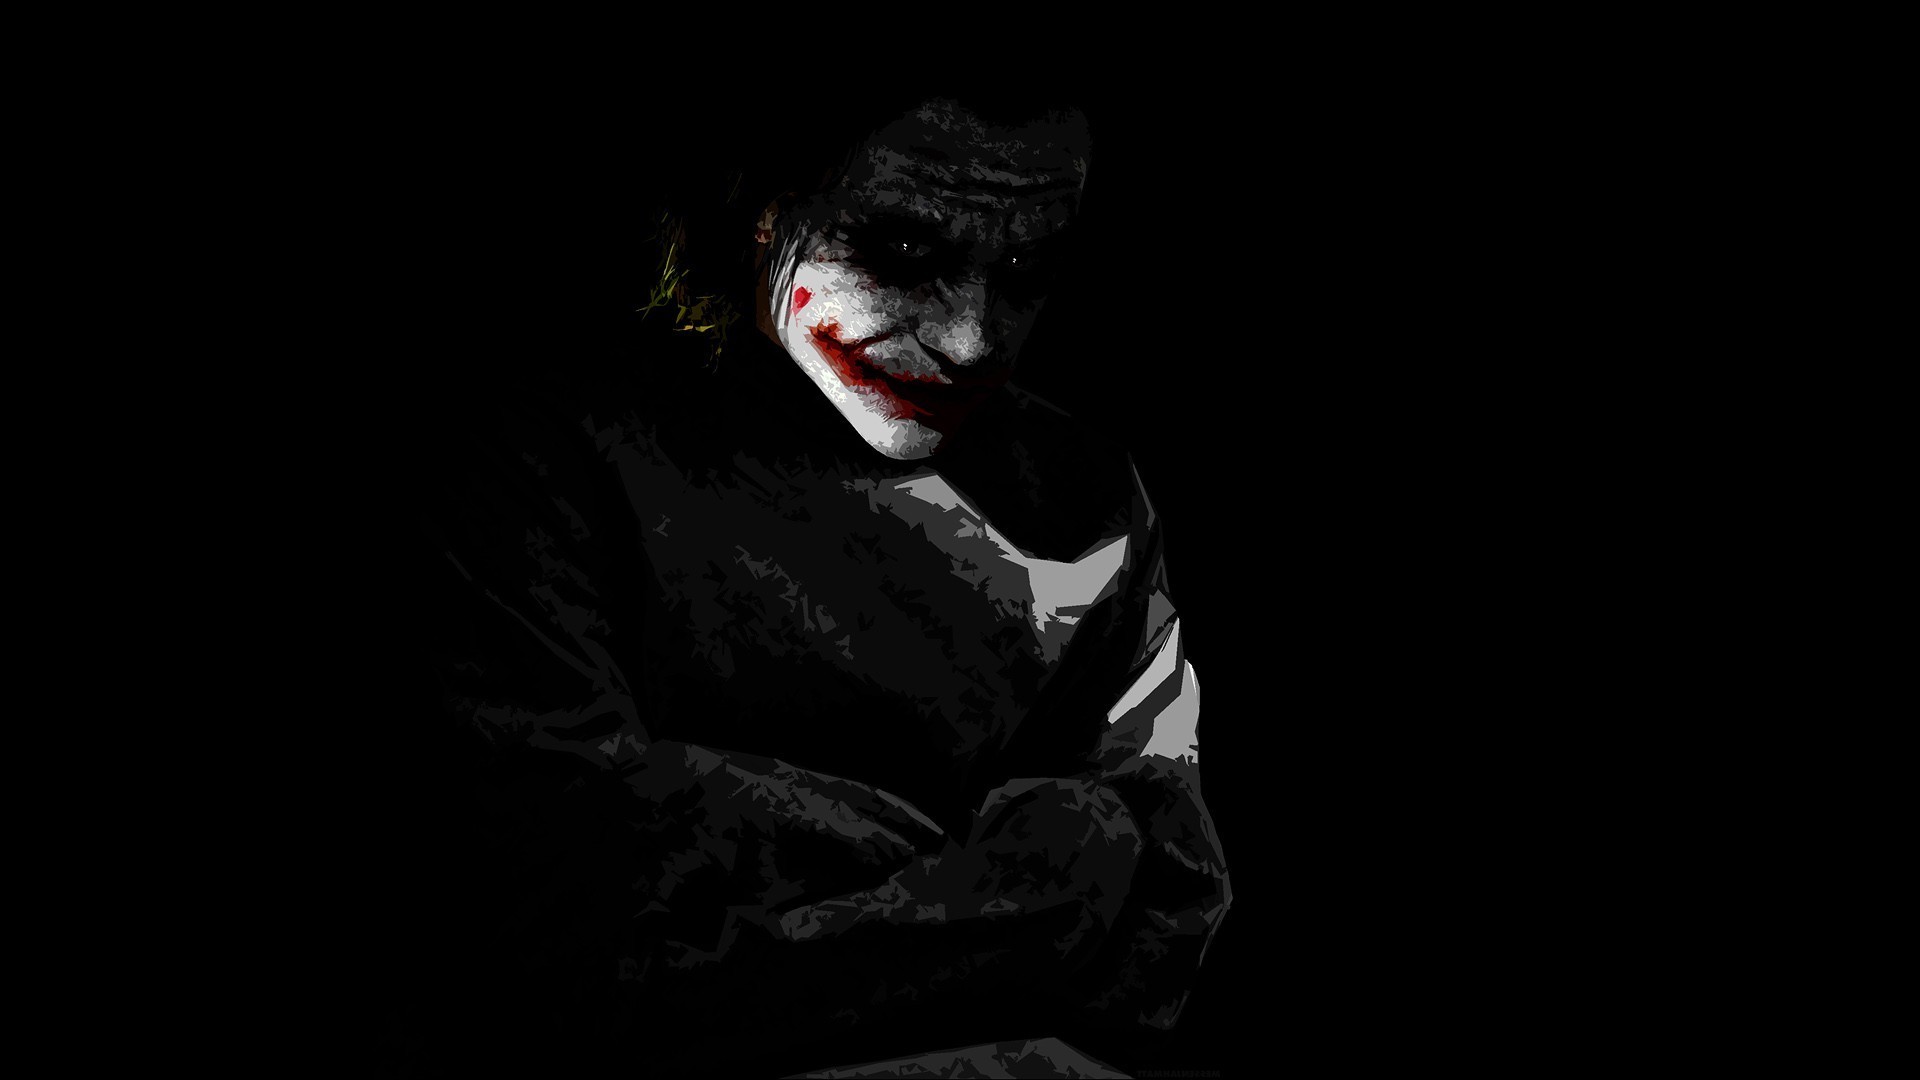 The Dark  Knight  Joker  Movies MessenjahMatt Wallpapers  